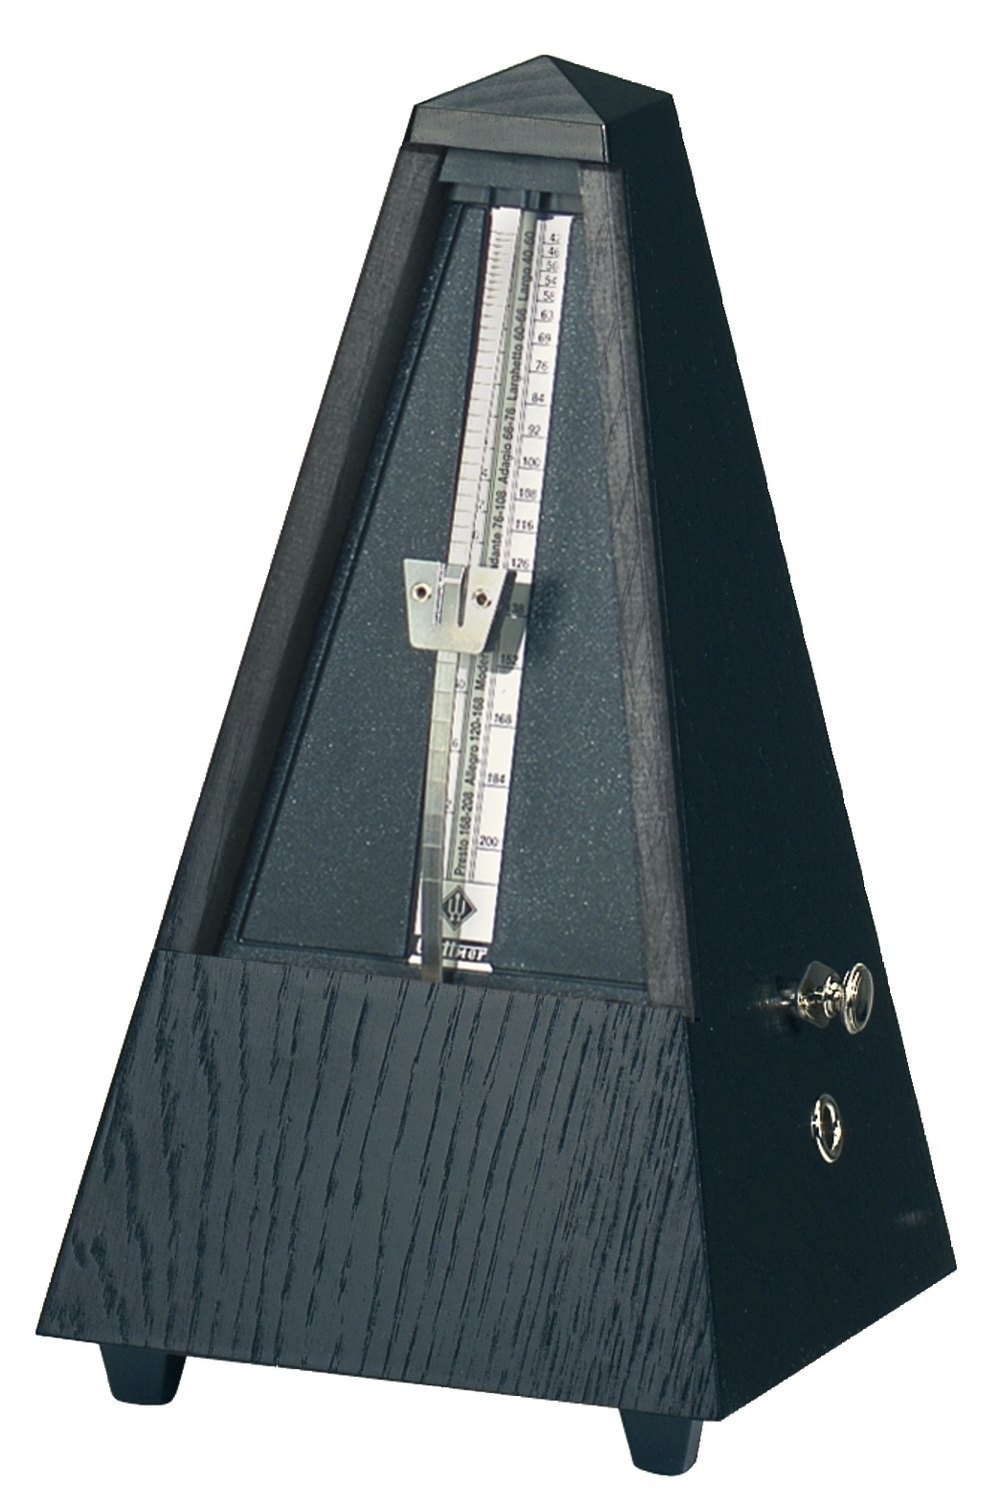 Wittner Taktell Pyramidenform, Holzgehuse mit Glocke